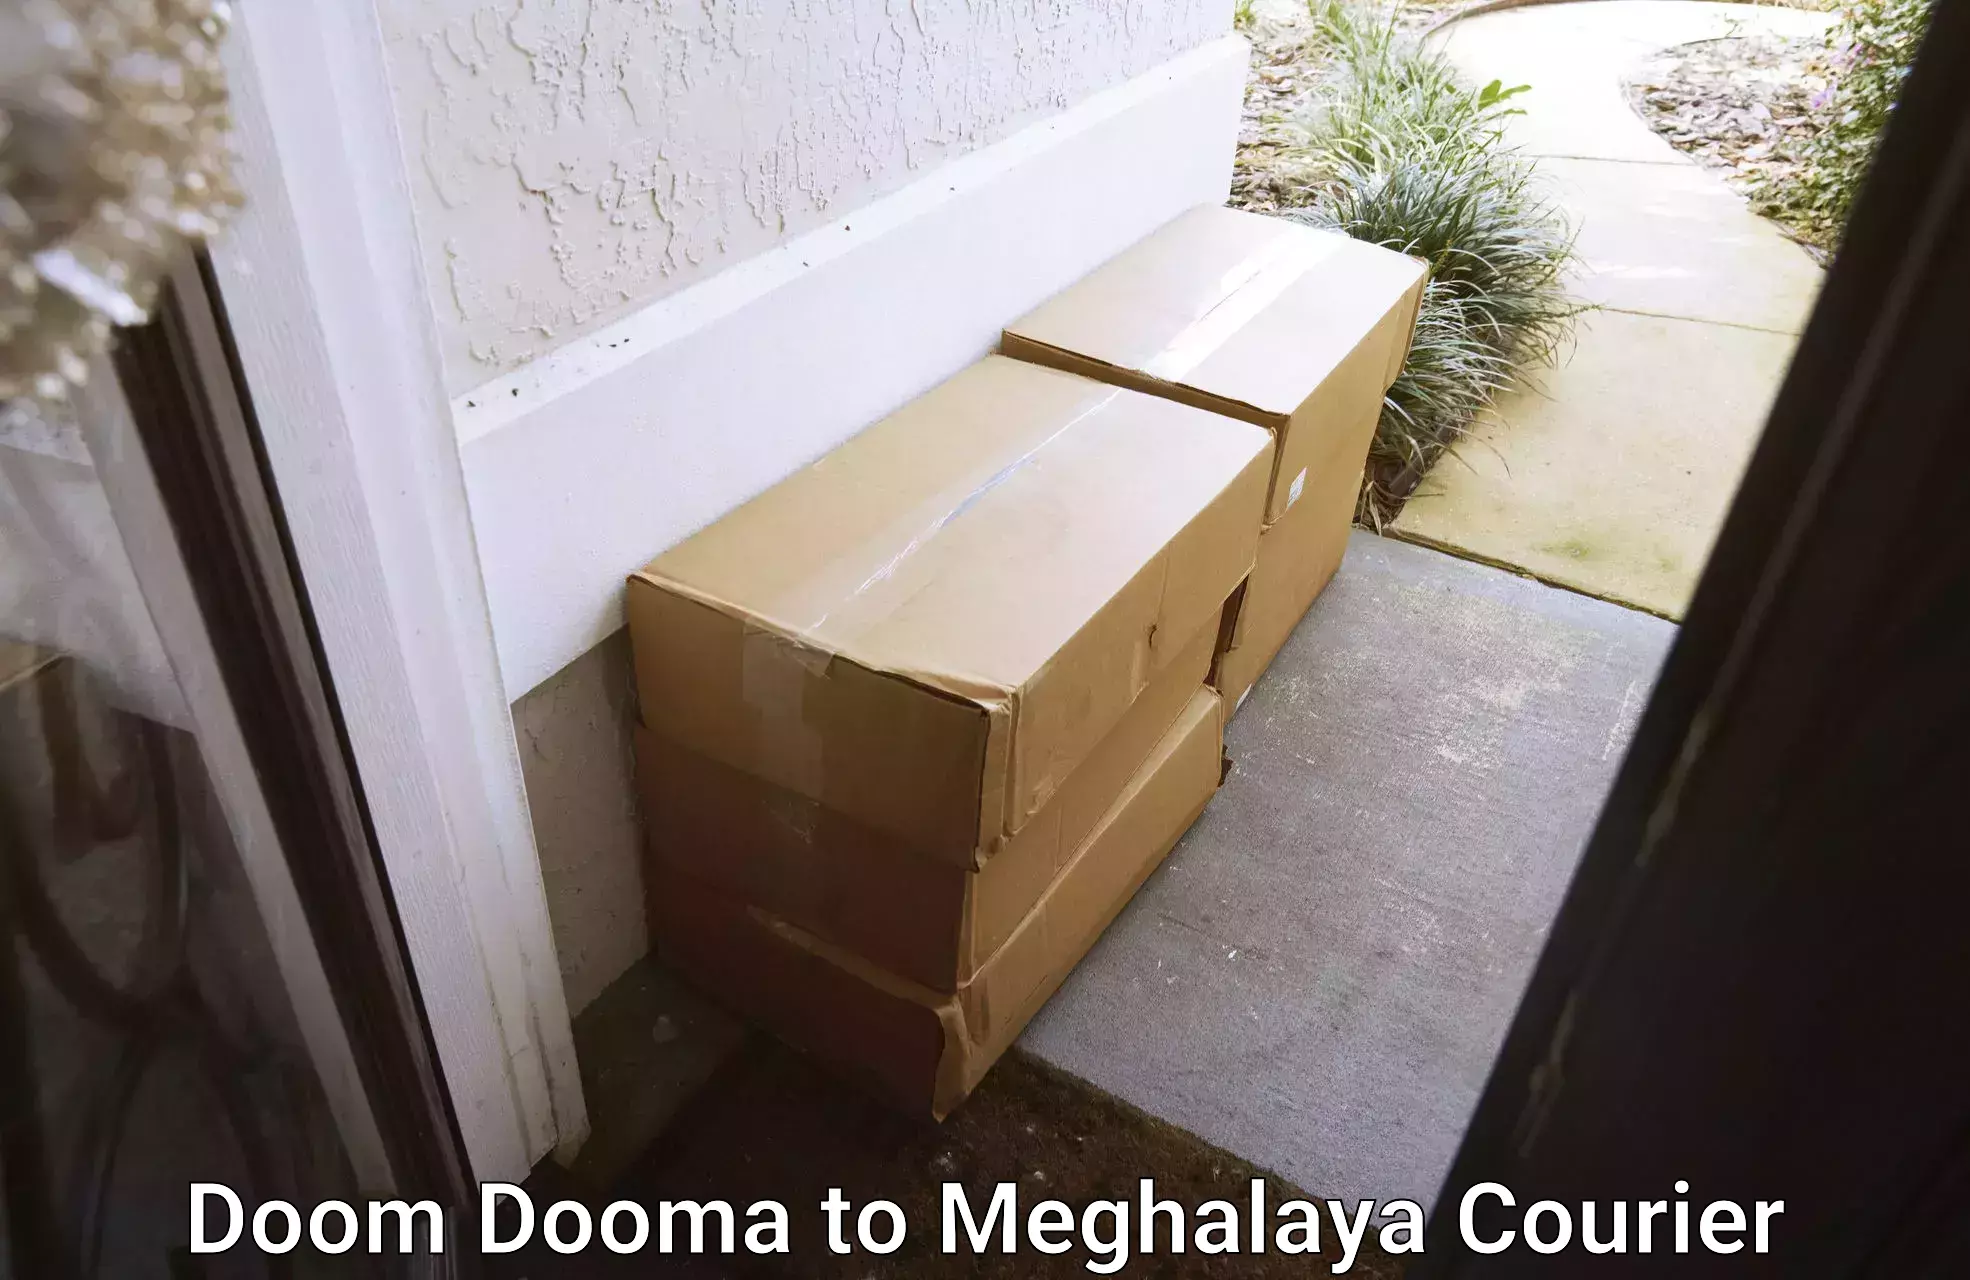 Express package handling Doom Dooma to Cherrapunji